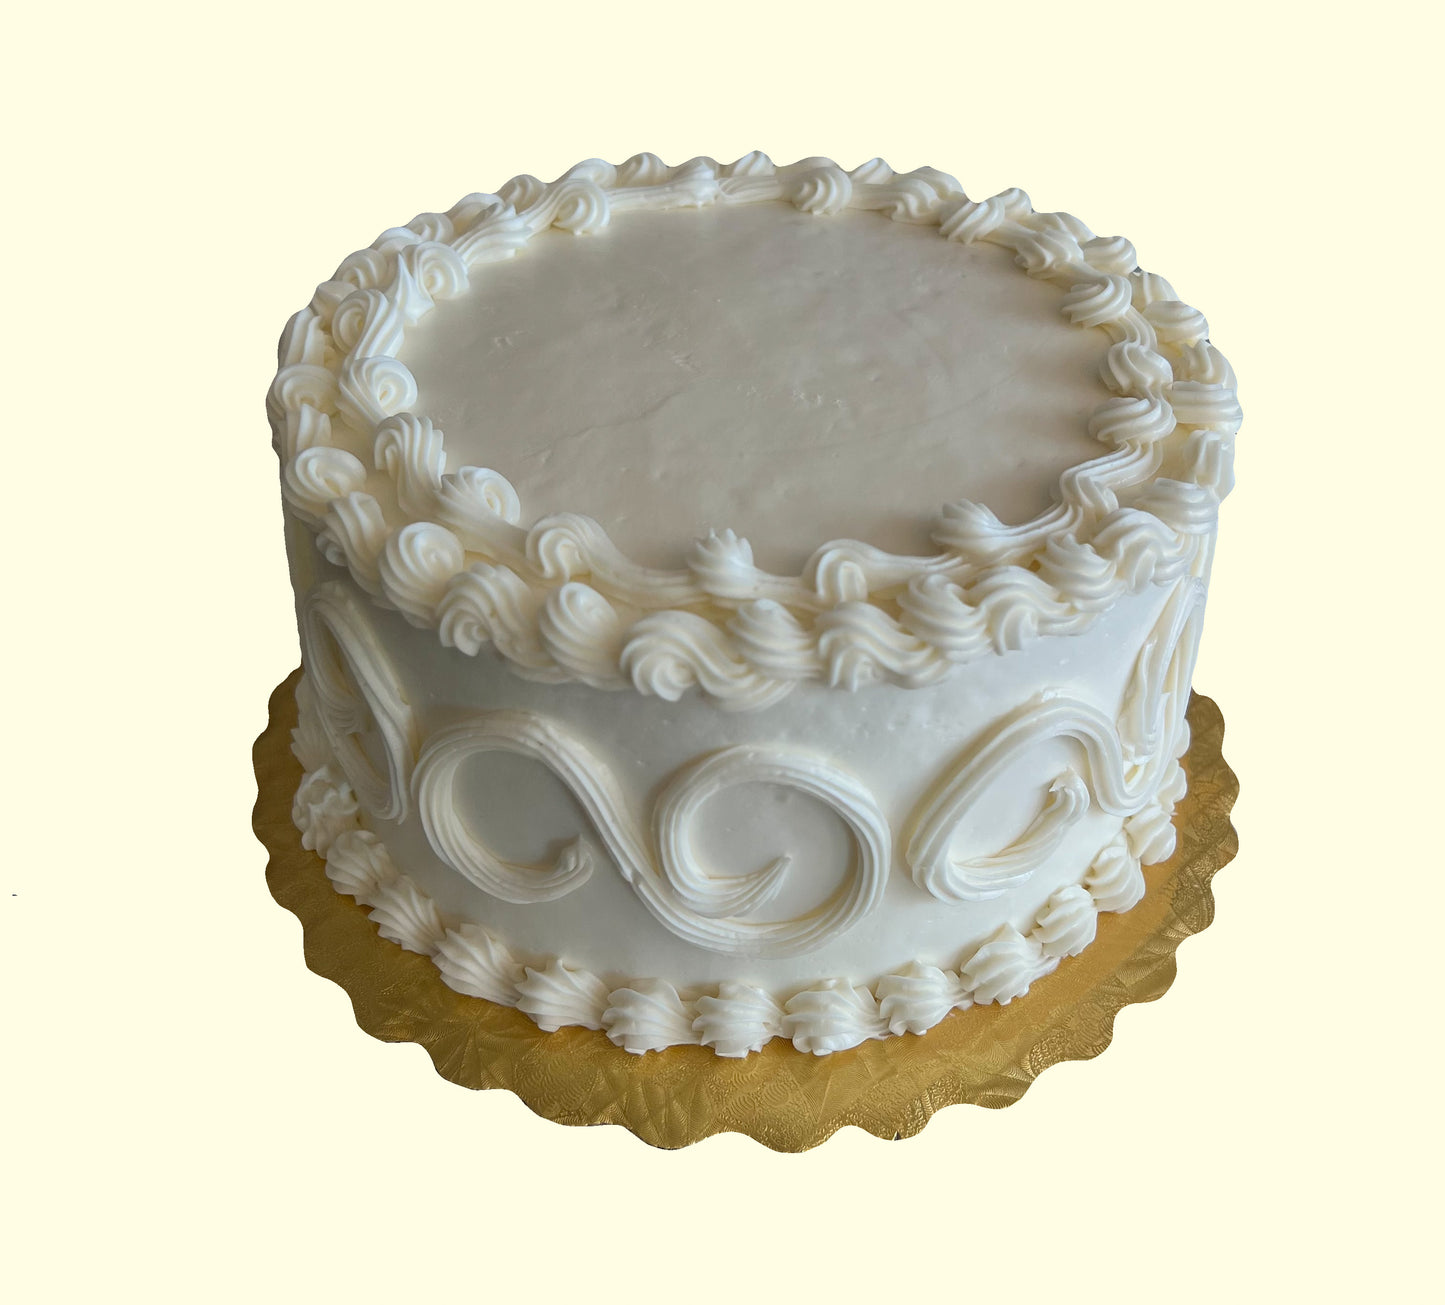 Vanilla/White Cake - Village Bakery